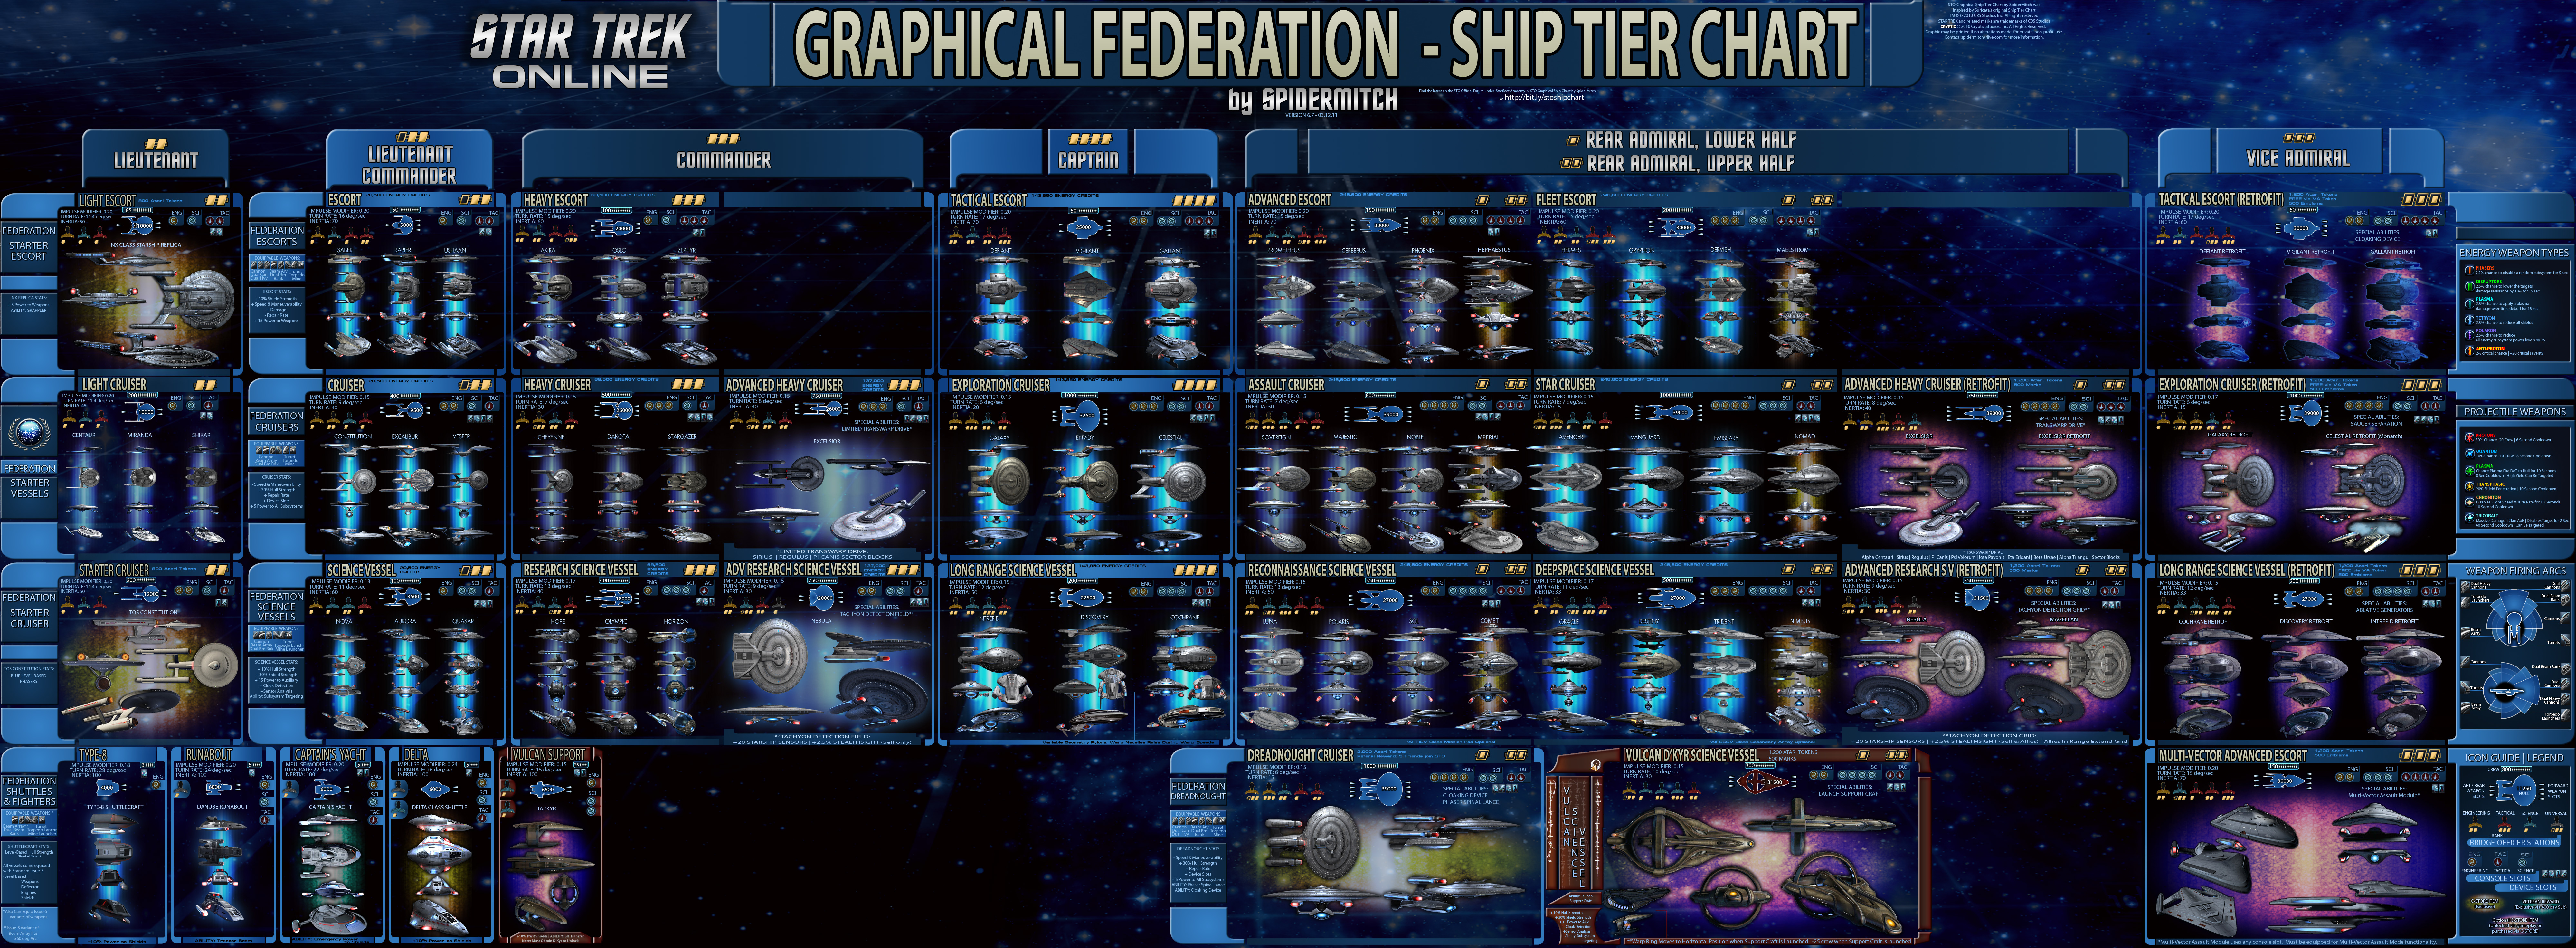 Star Trek Discovery Timeline Chart